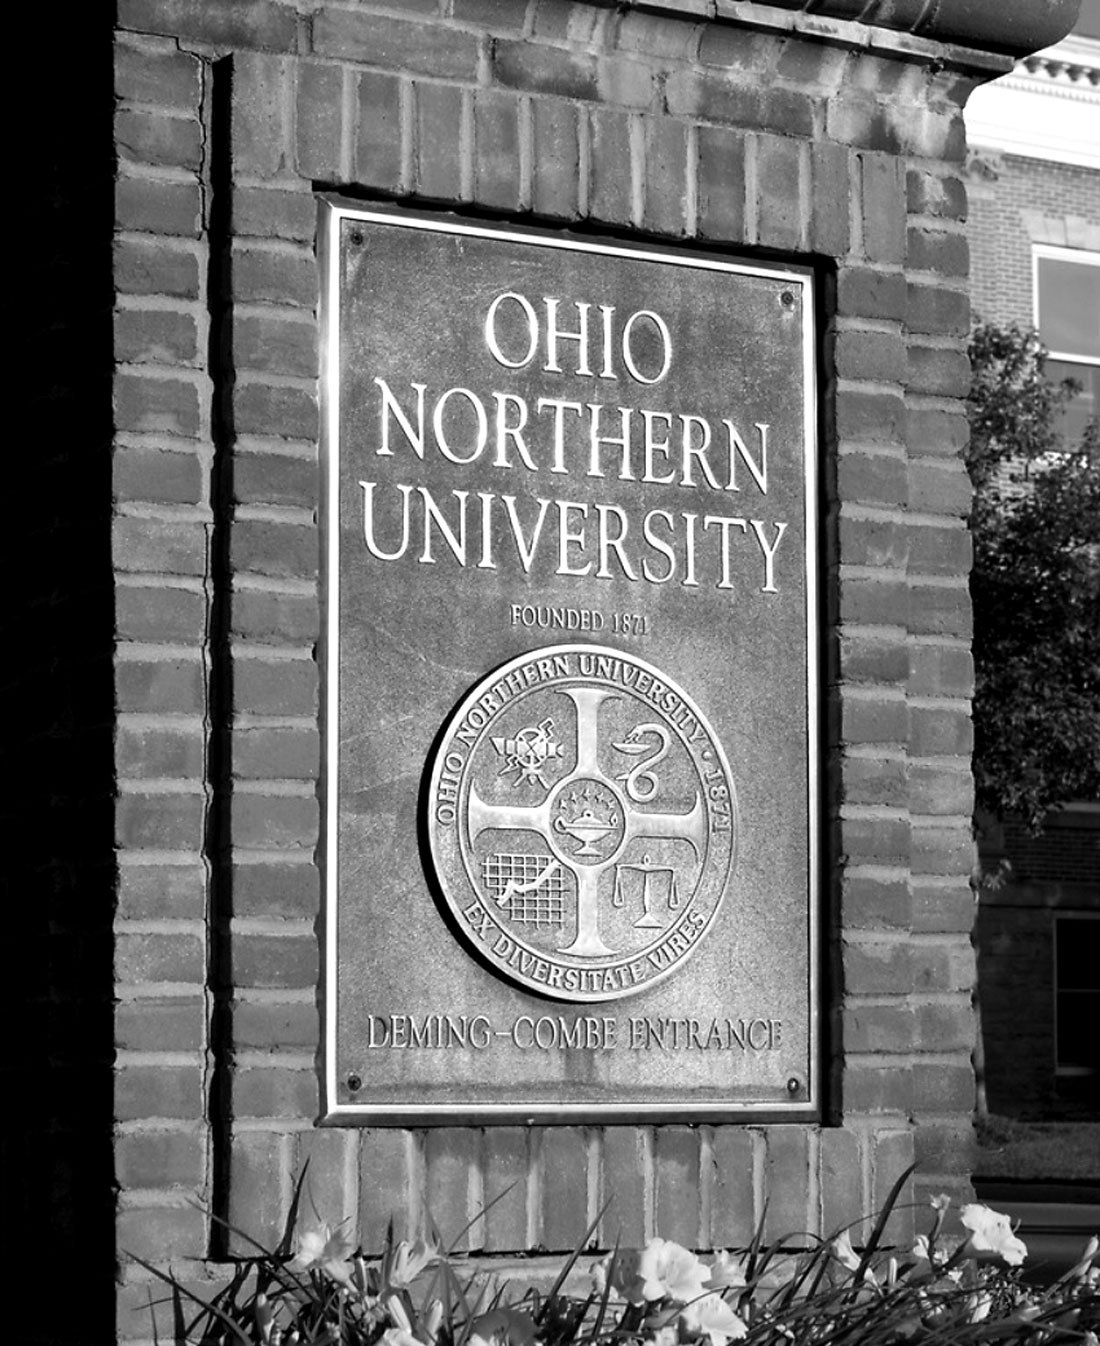 Ohio Northern University sign.